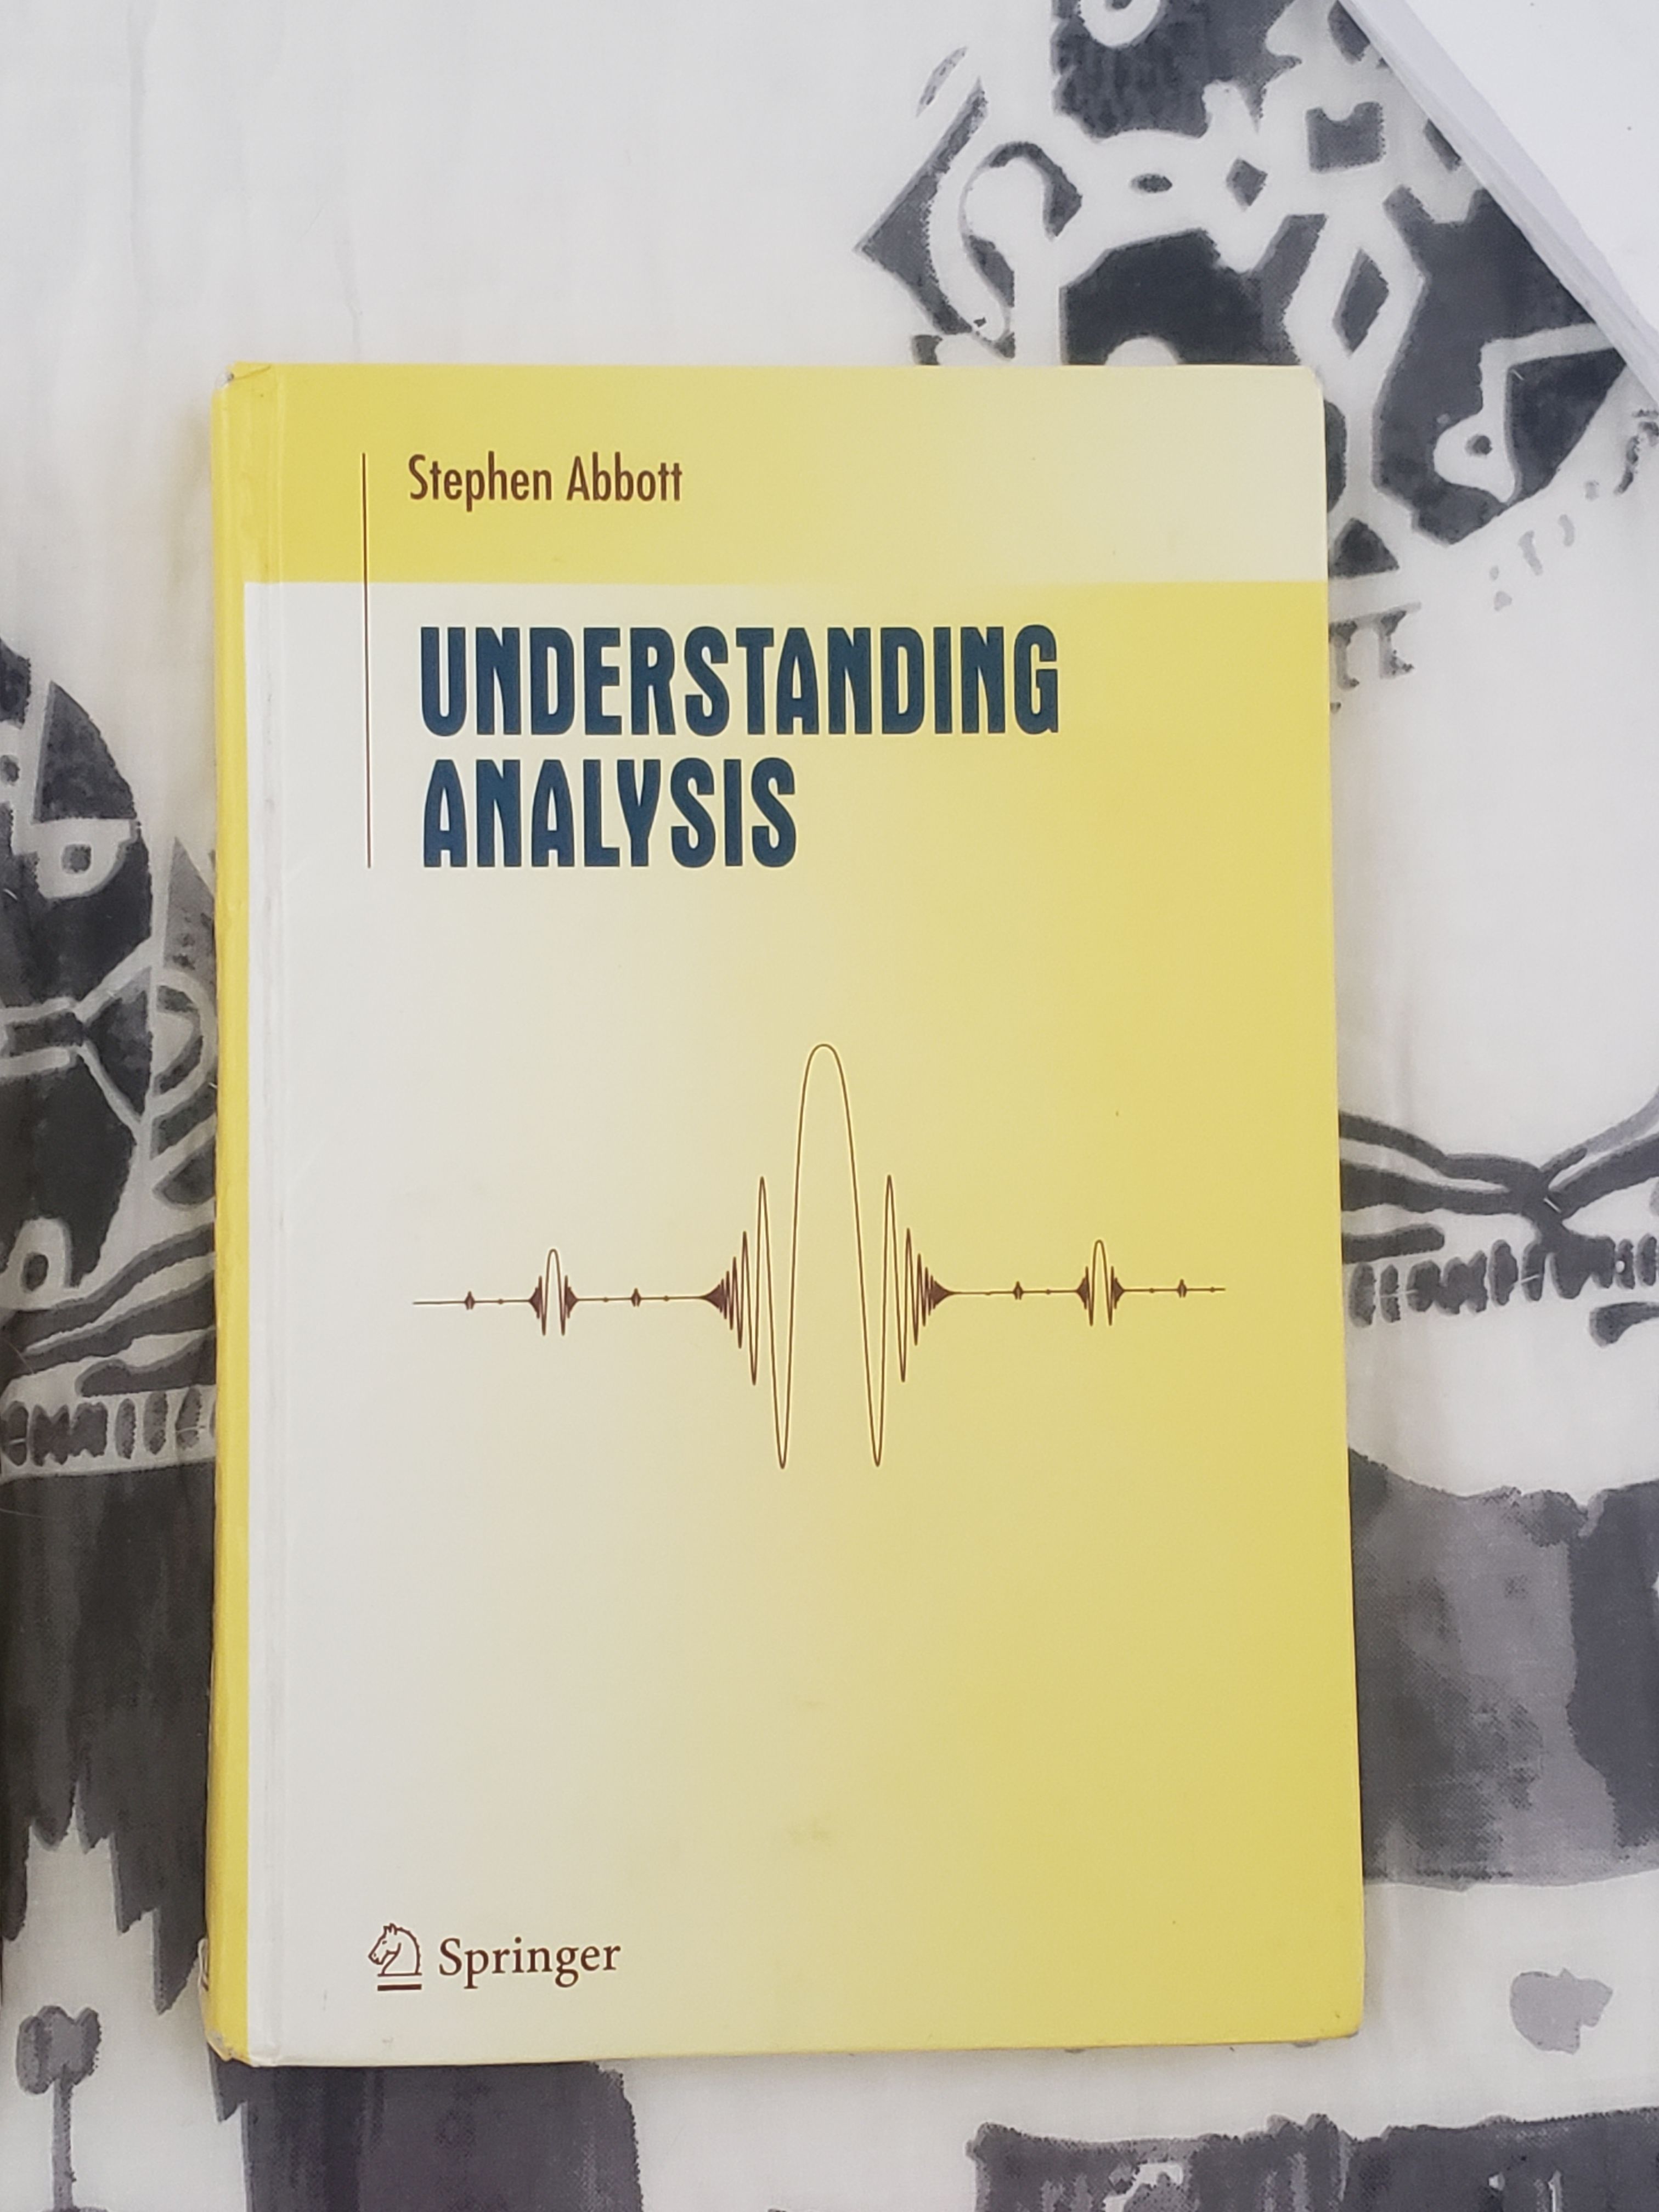 “Understanding Analysis” by Stephen Abbott, Springer Publications